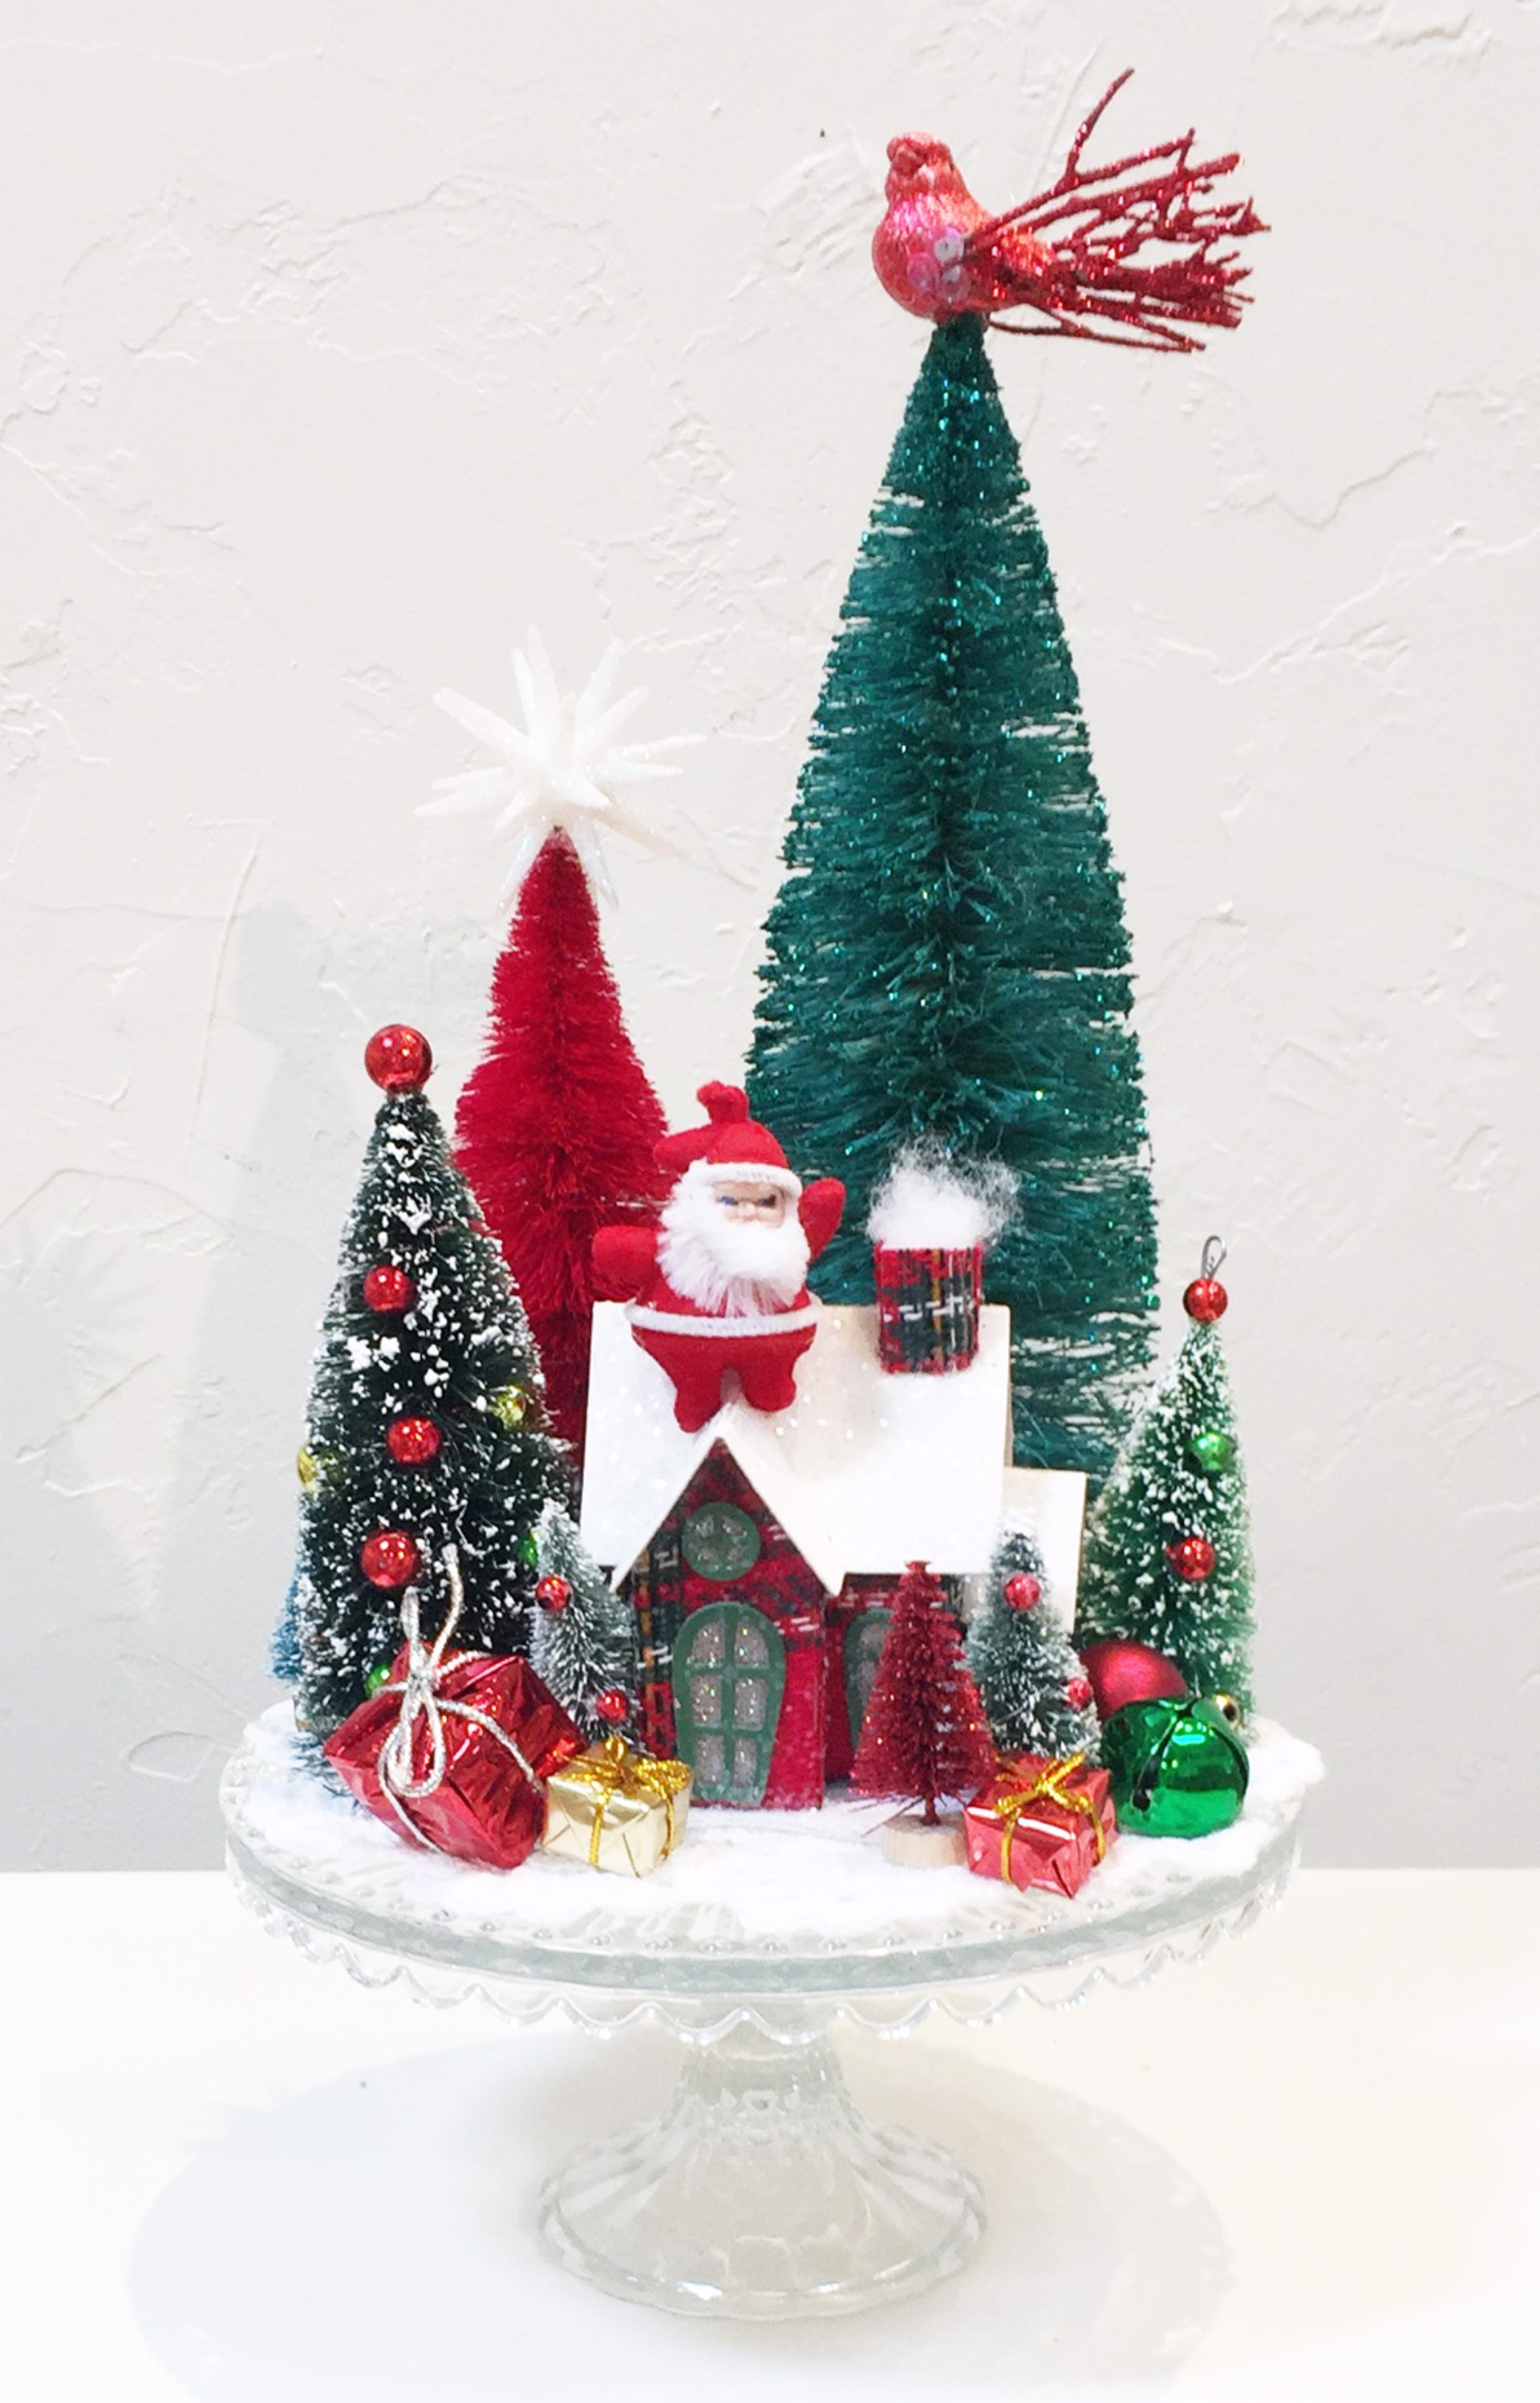 Holiday Vignette - Winter Scene With Santa by Kim Yubeta